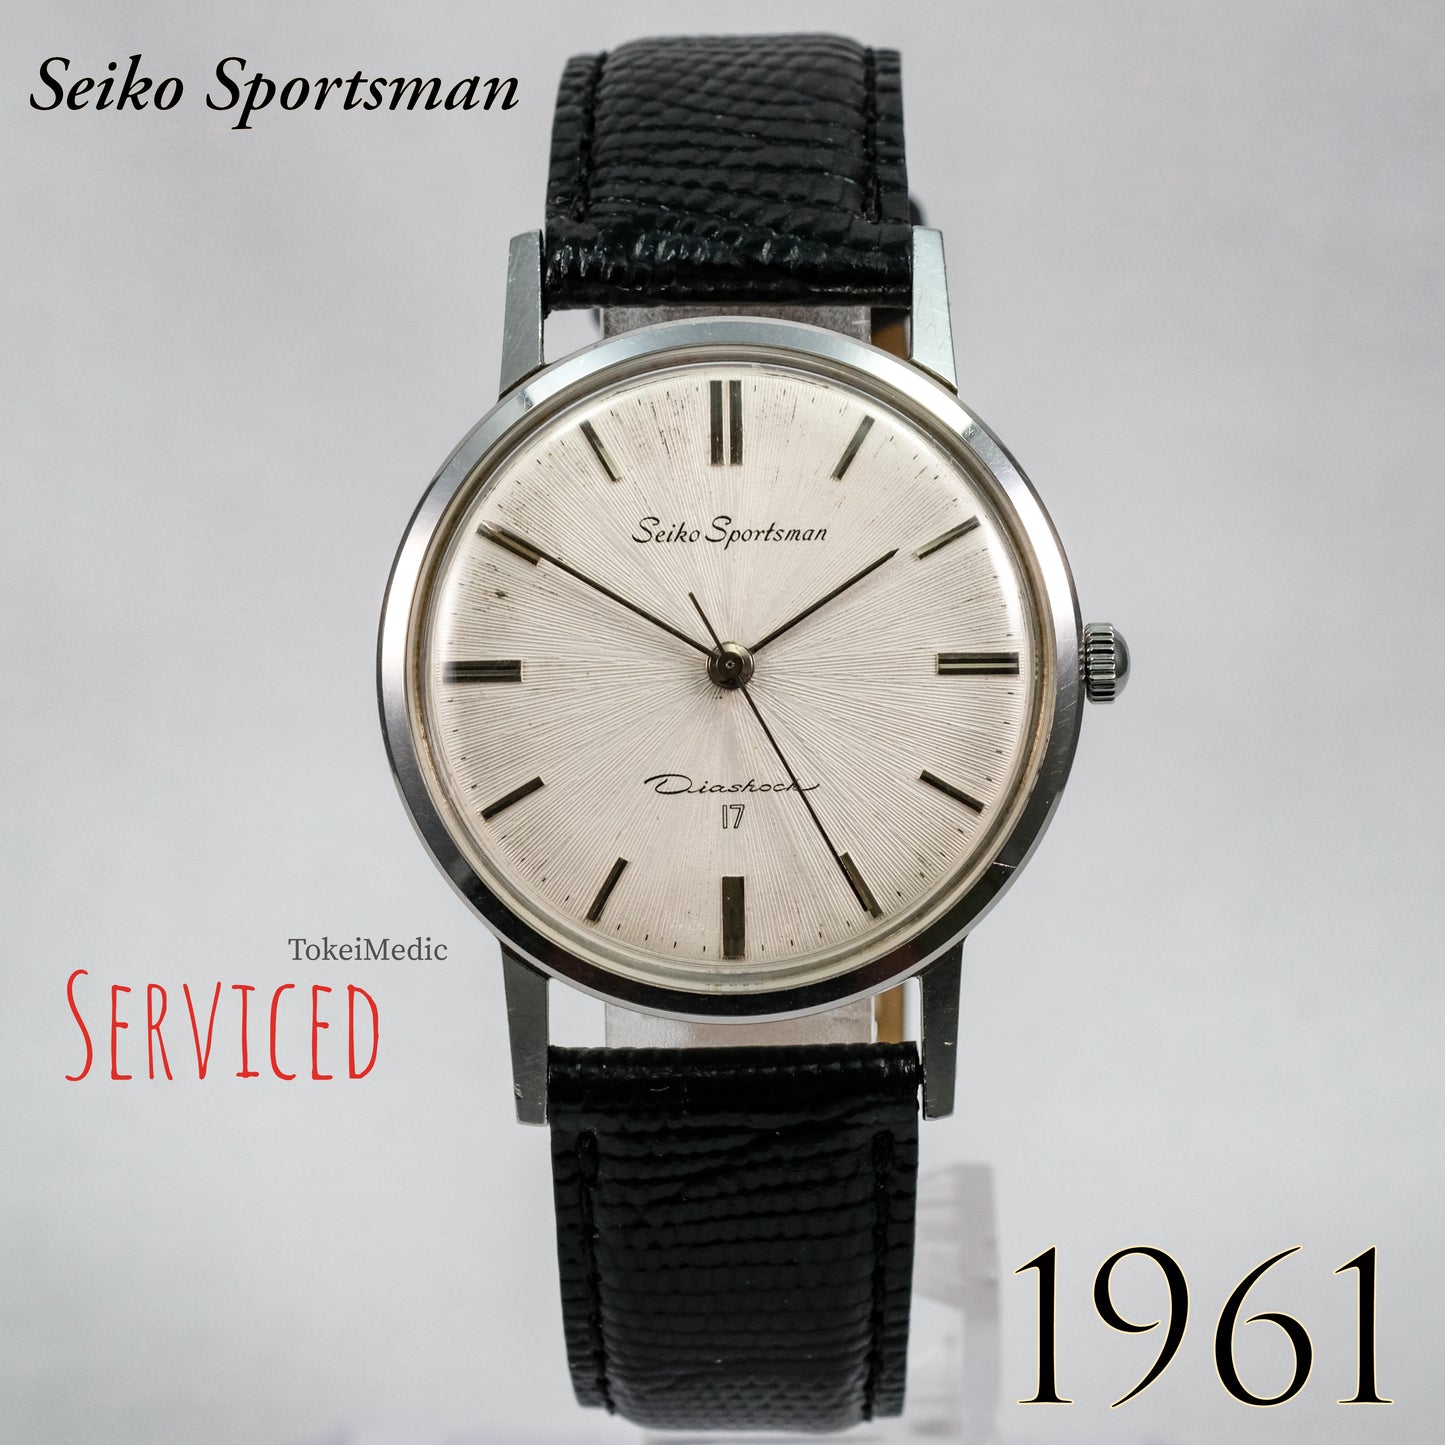 1961 Seiko Sportsman J14087